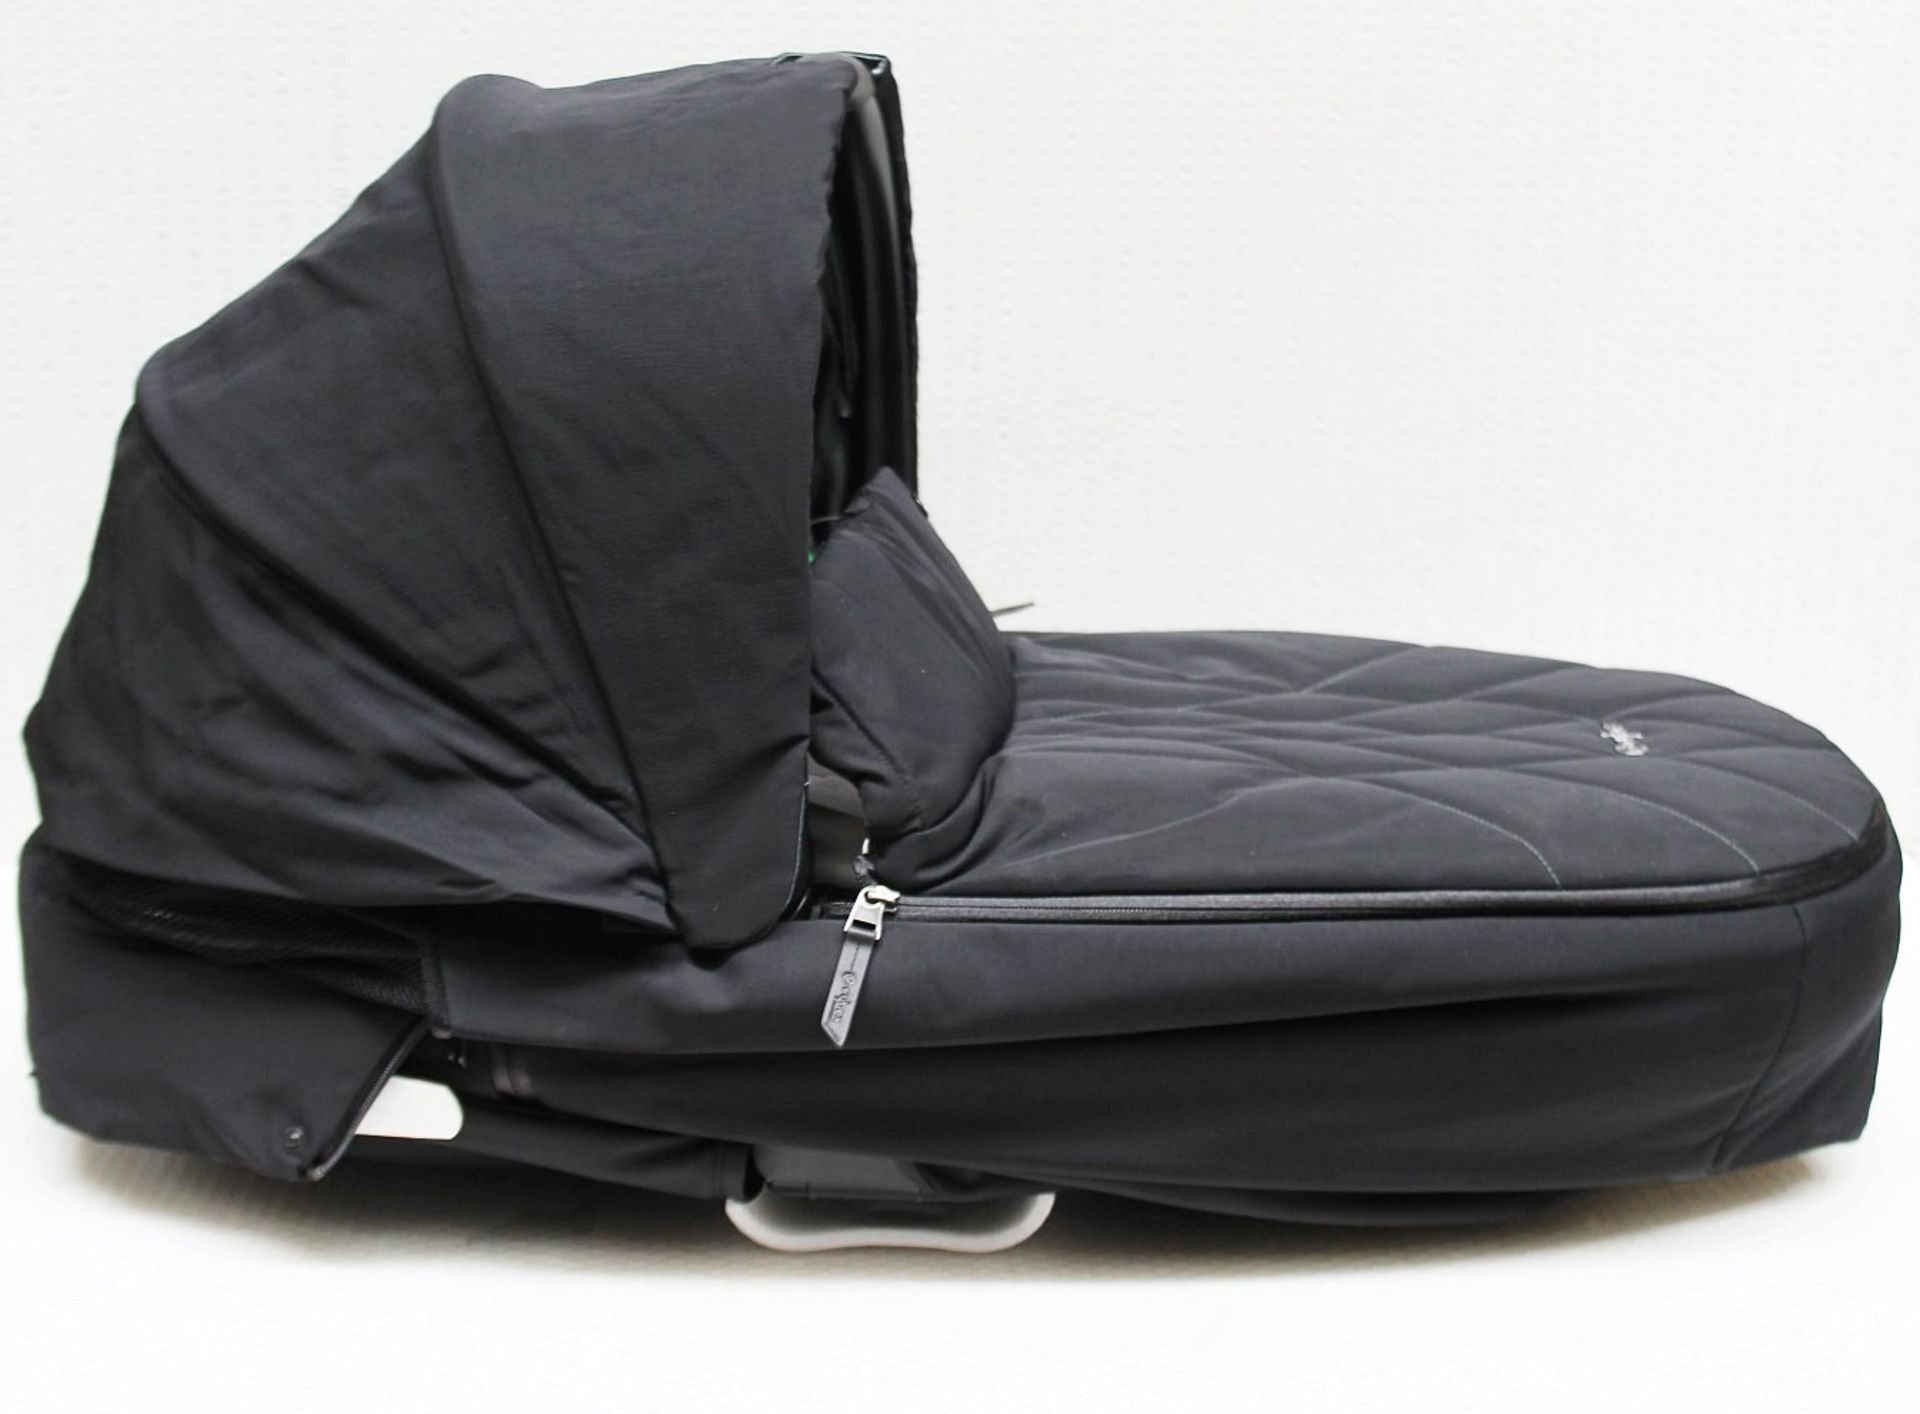 1 x CYBEX 'Priam' Luxury Carrycot In Black - Original Price £329.95 - Unused Boxed Stock - Image 19 of 19